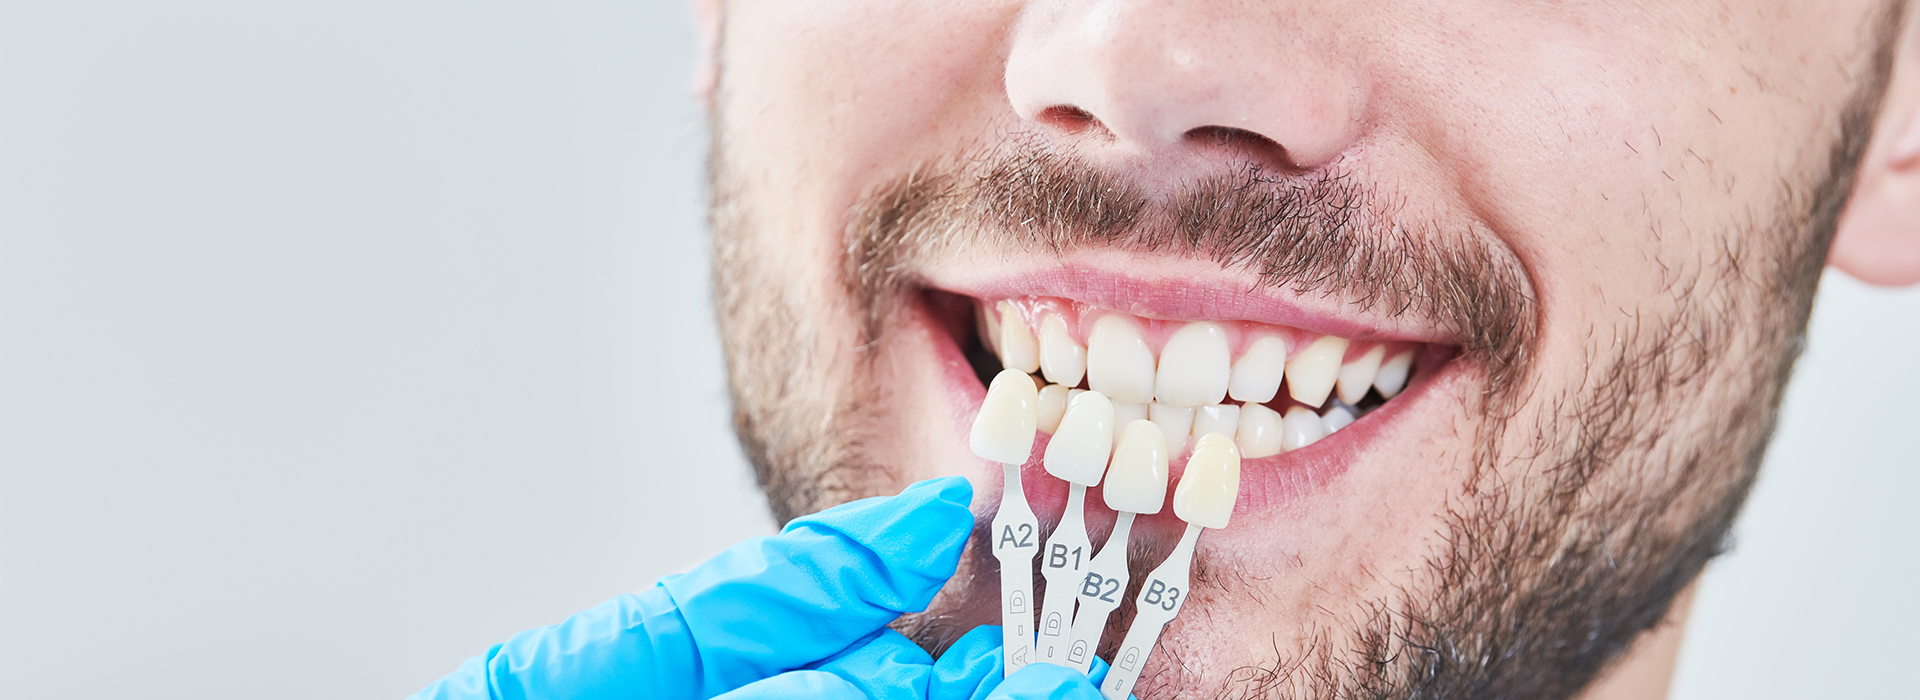 Kohn   Kollander Dental PLLC | Digital Radiography, Sports Mouthguards and Ceramic Crowns